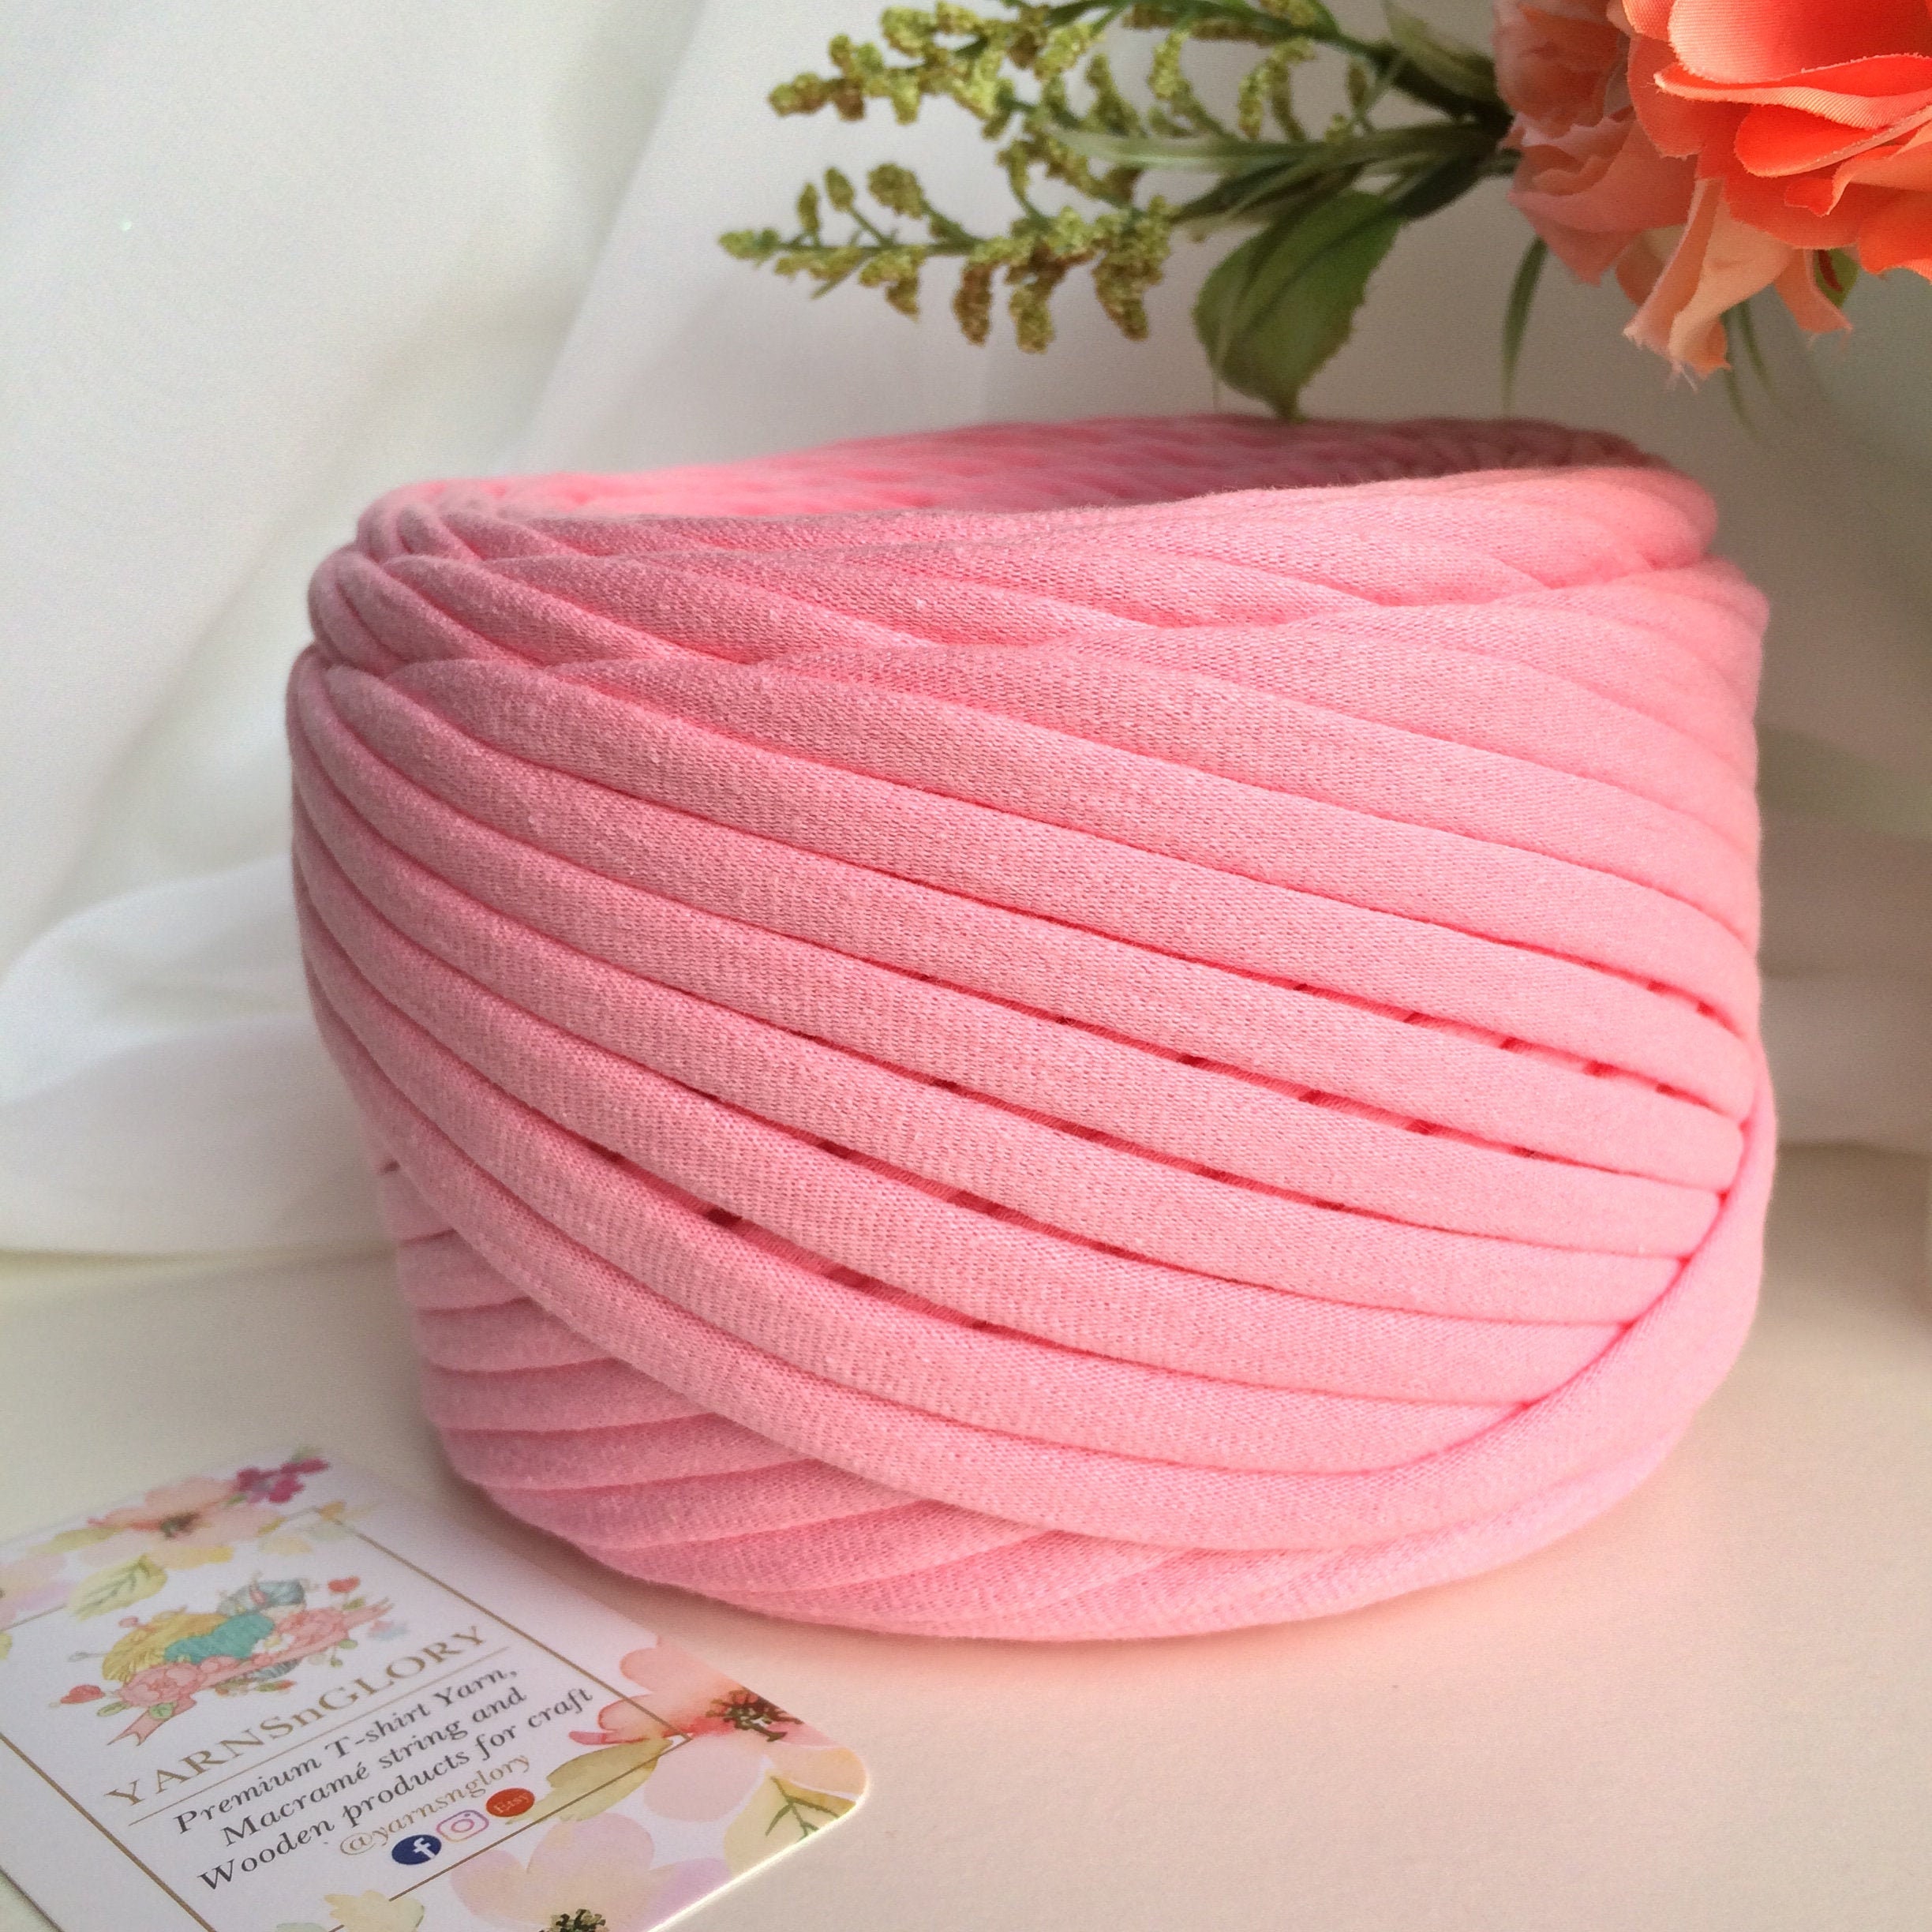 COTTON CANDY Pink Premium Tshirt yarn fil de cotton pour | Etsy